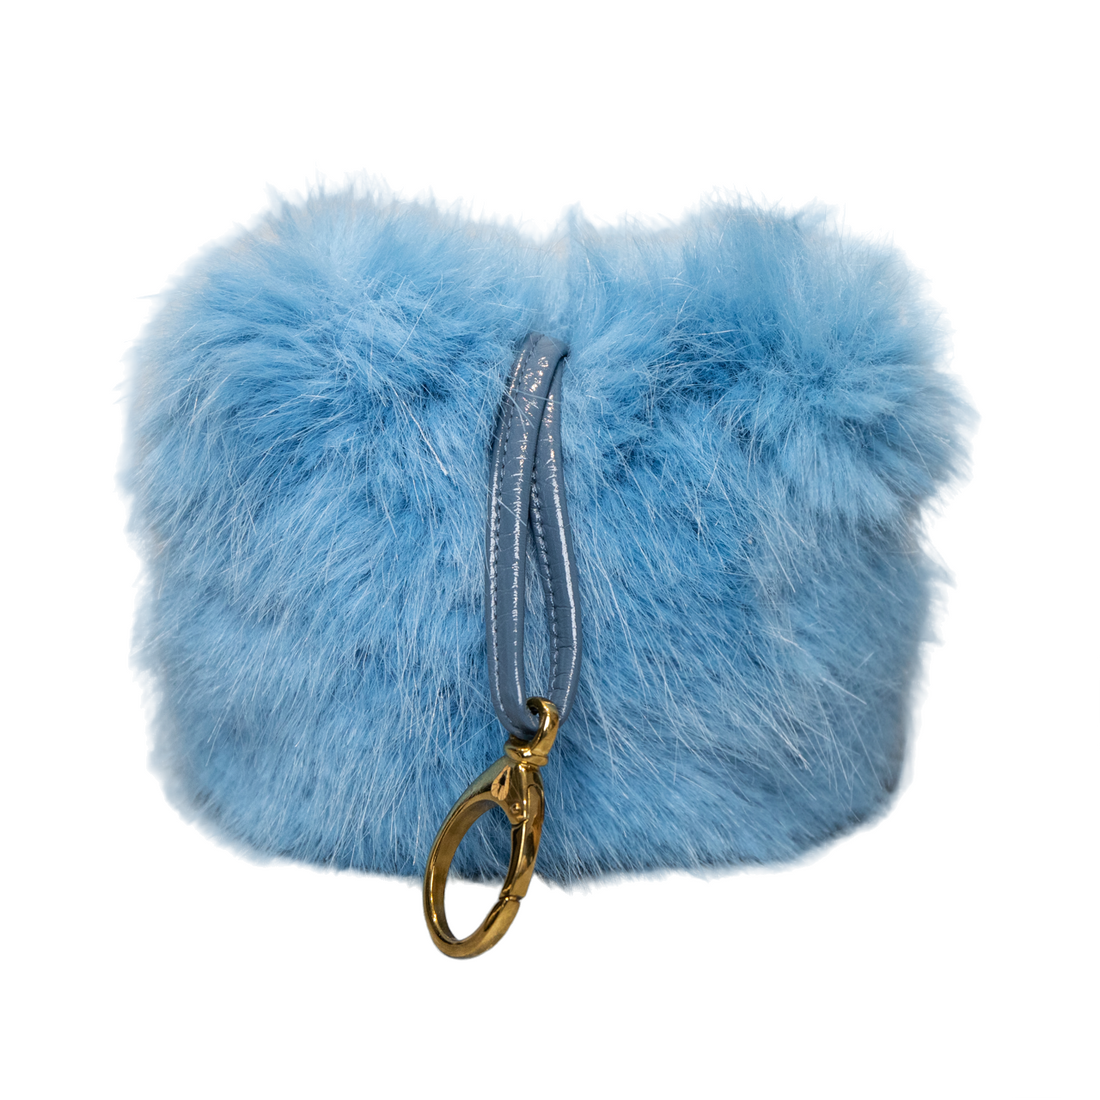 NN Blue fur pendant with carabiner hook